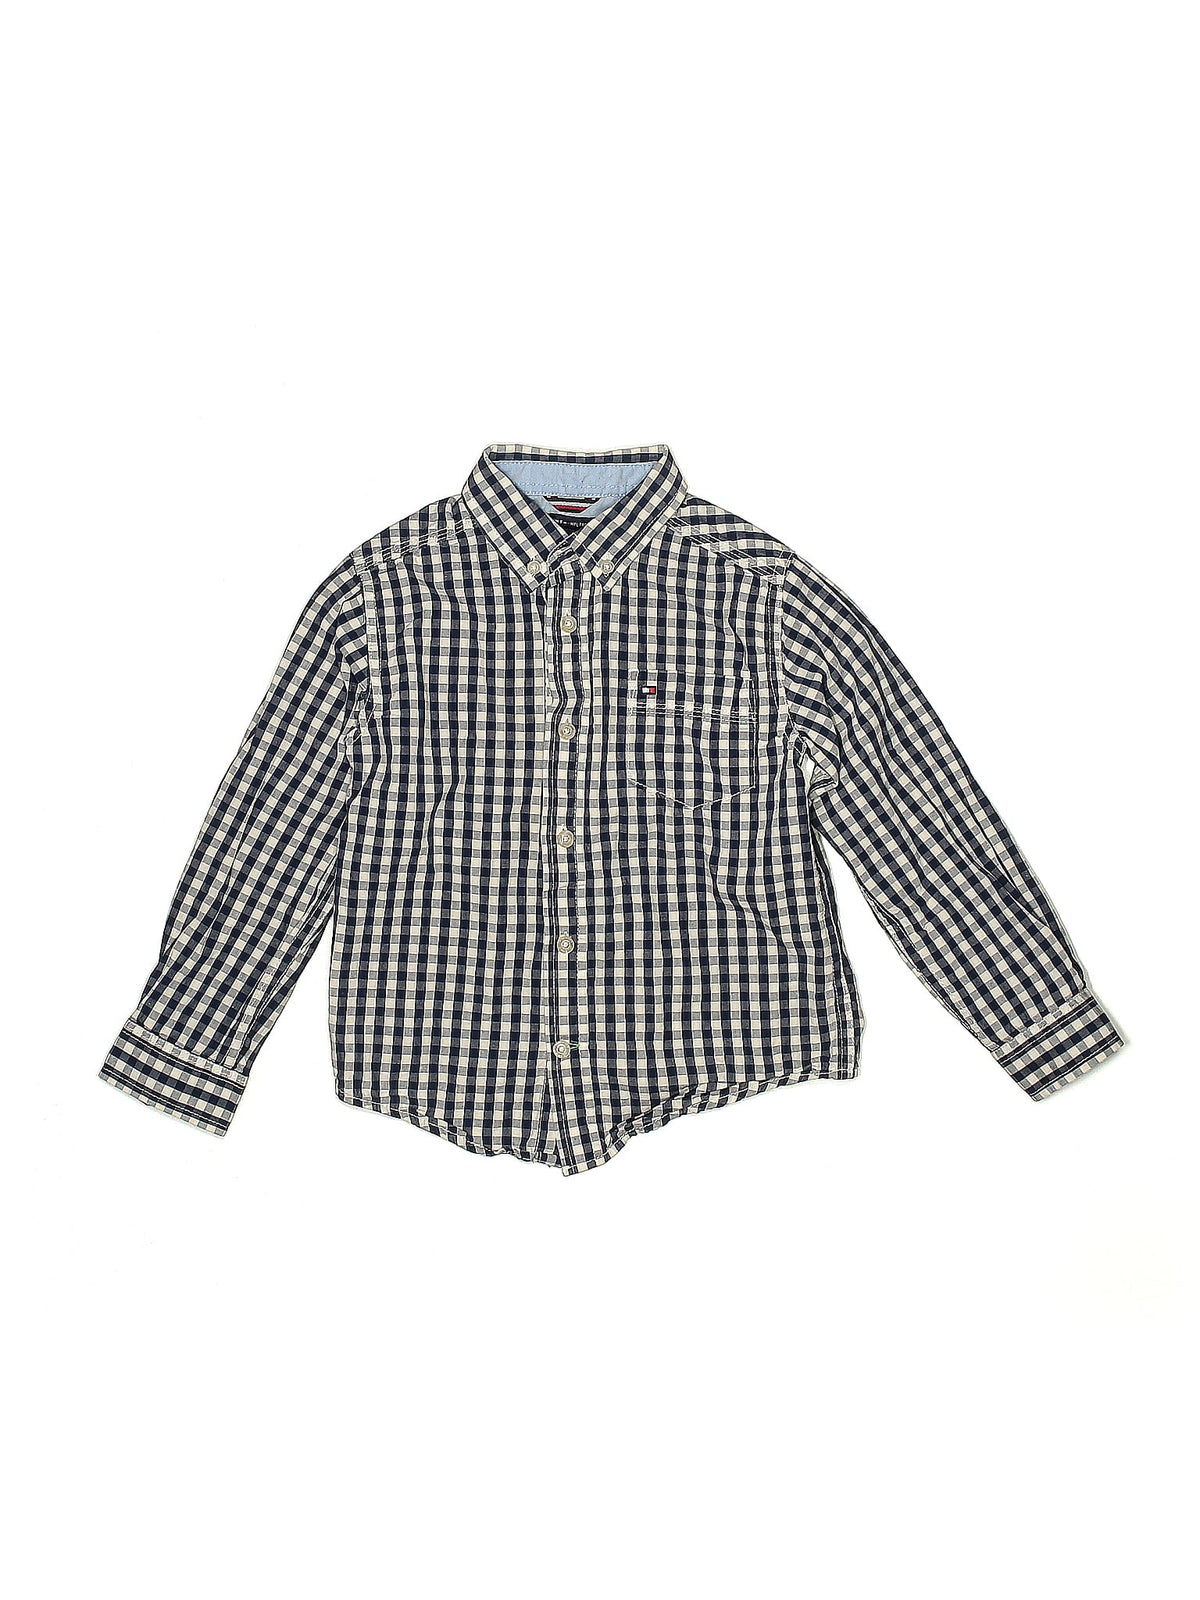 Long Sleeve Button Down Shirt size - 5